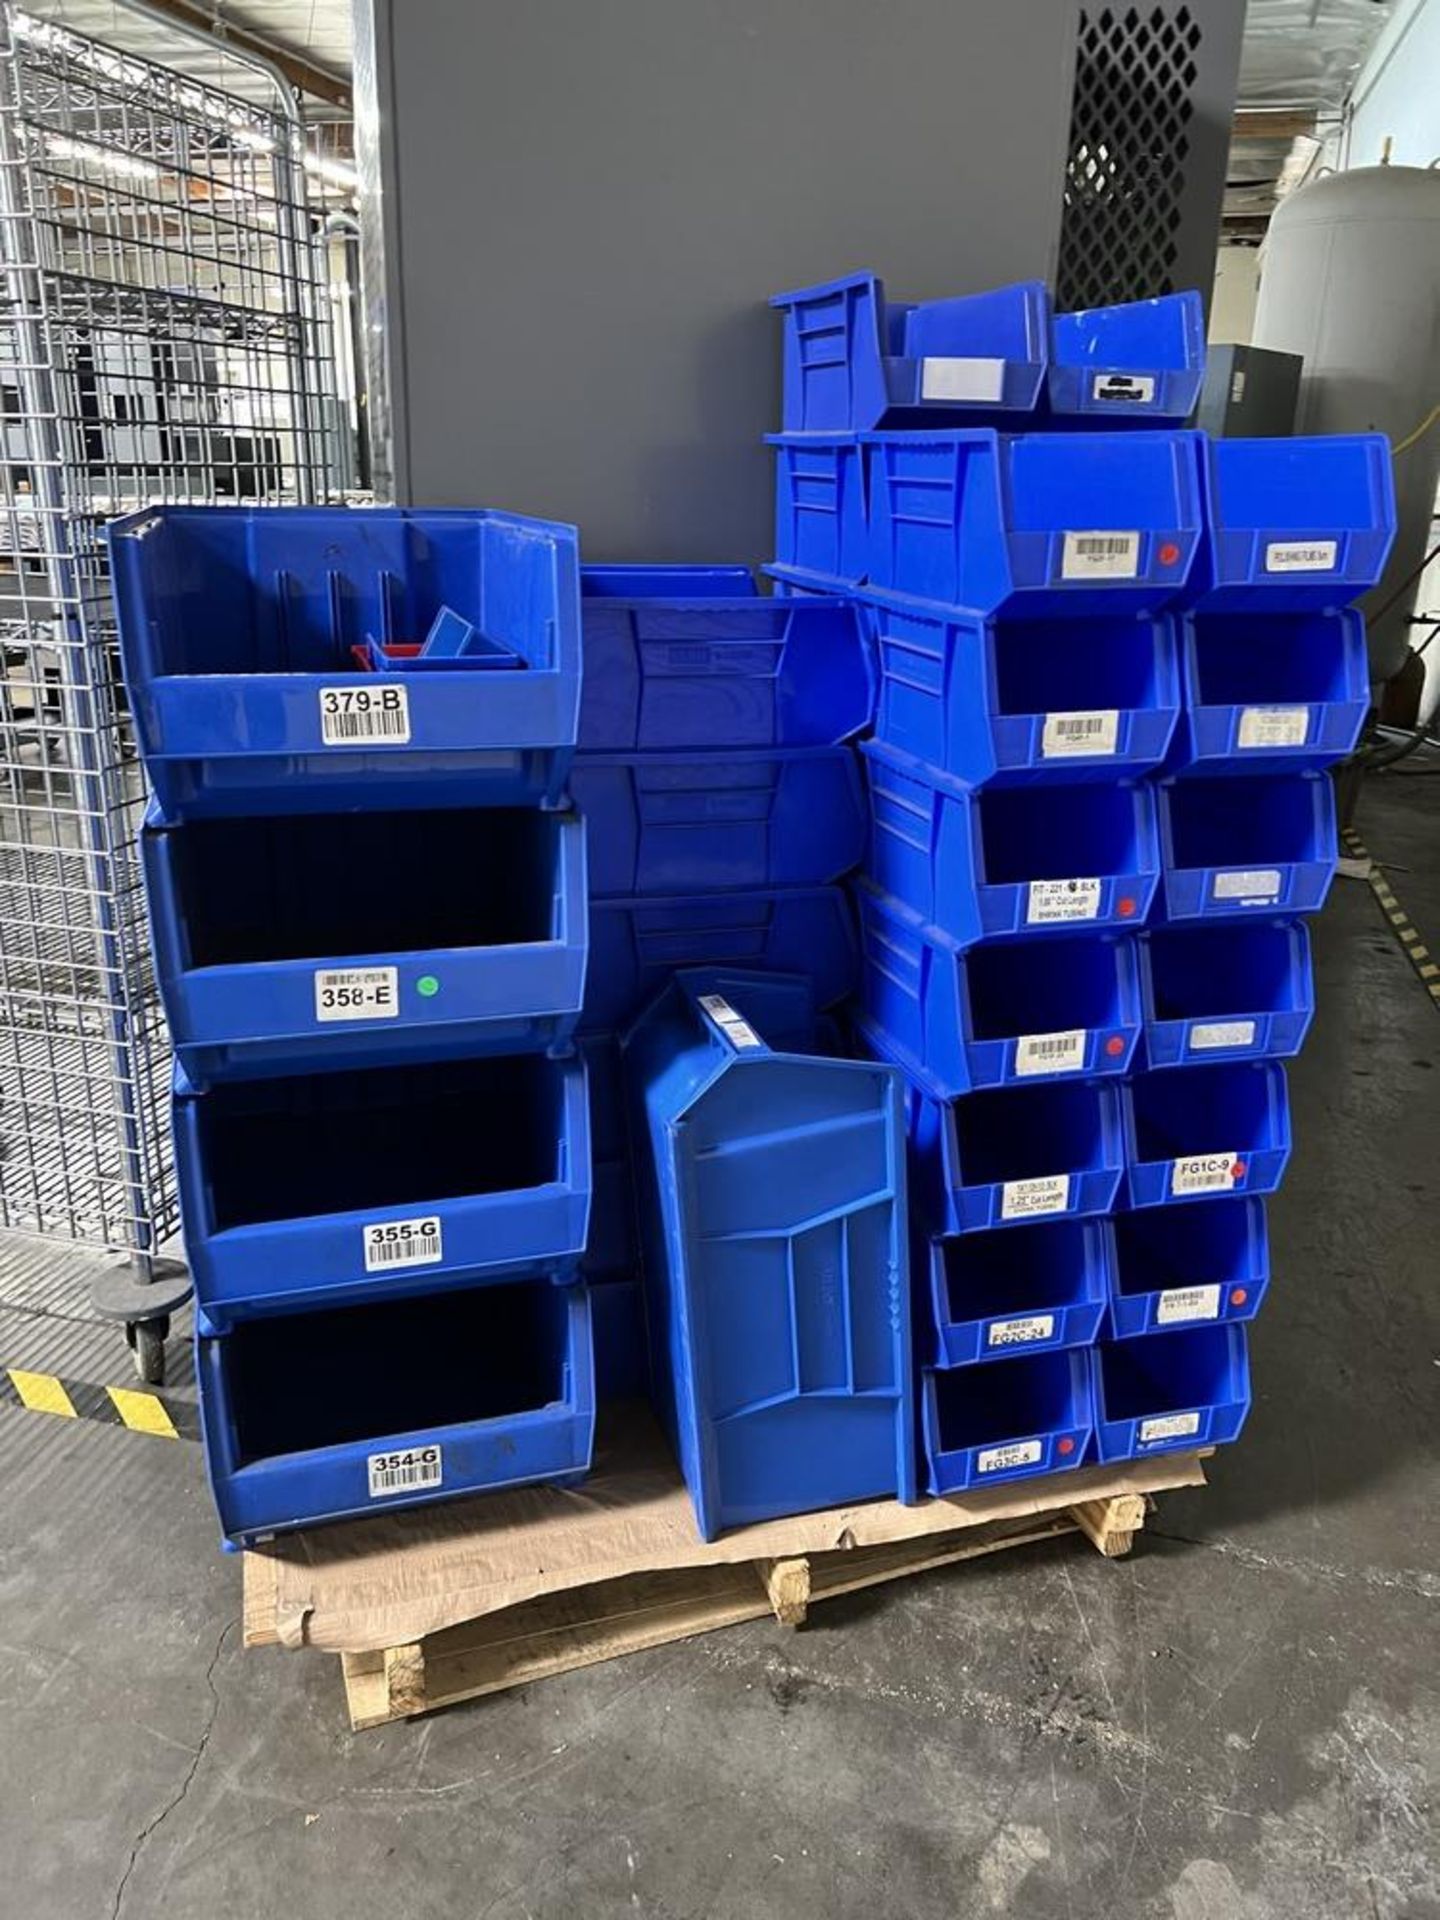 Pallet of Various Size Blue Storage/Organizer Bins Various Sizes